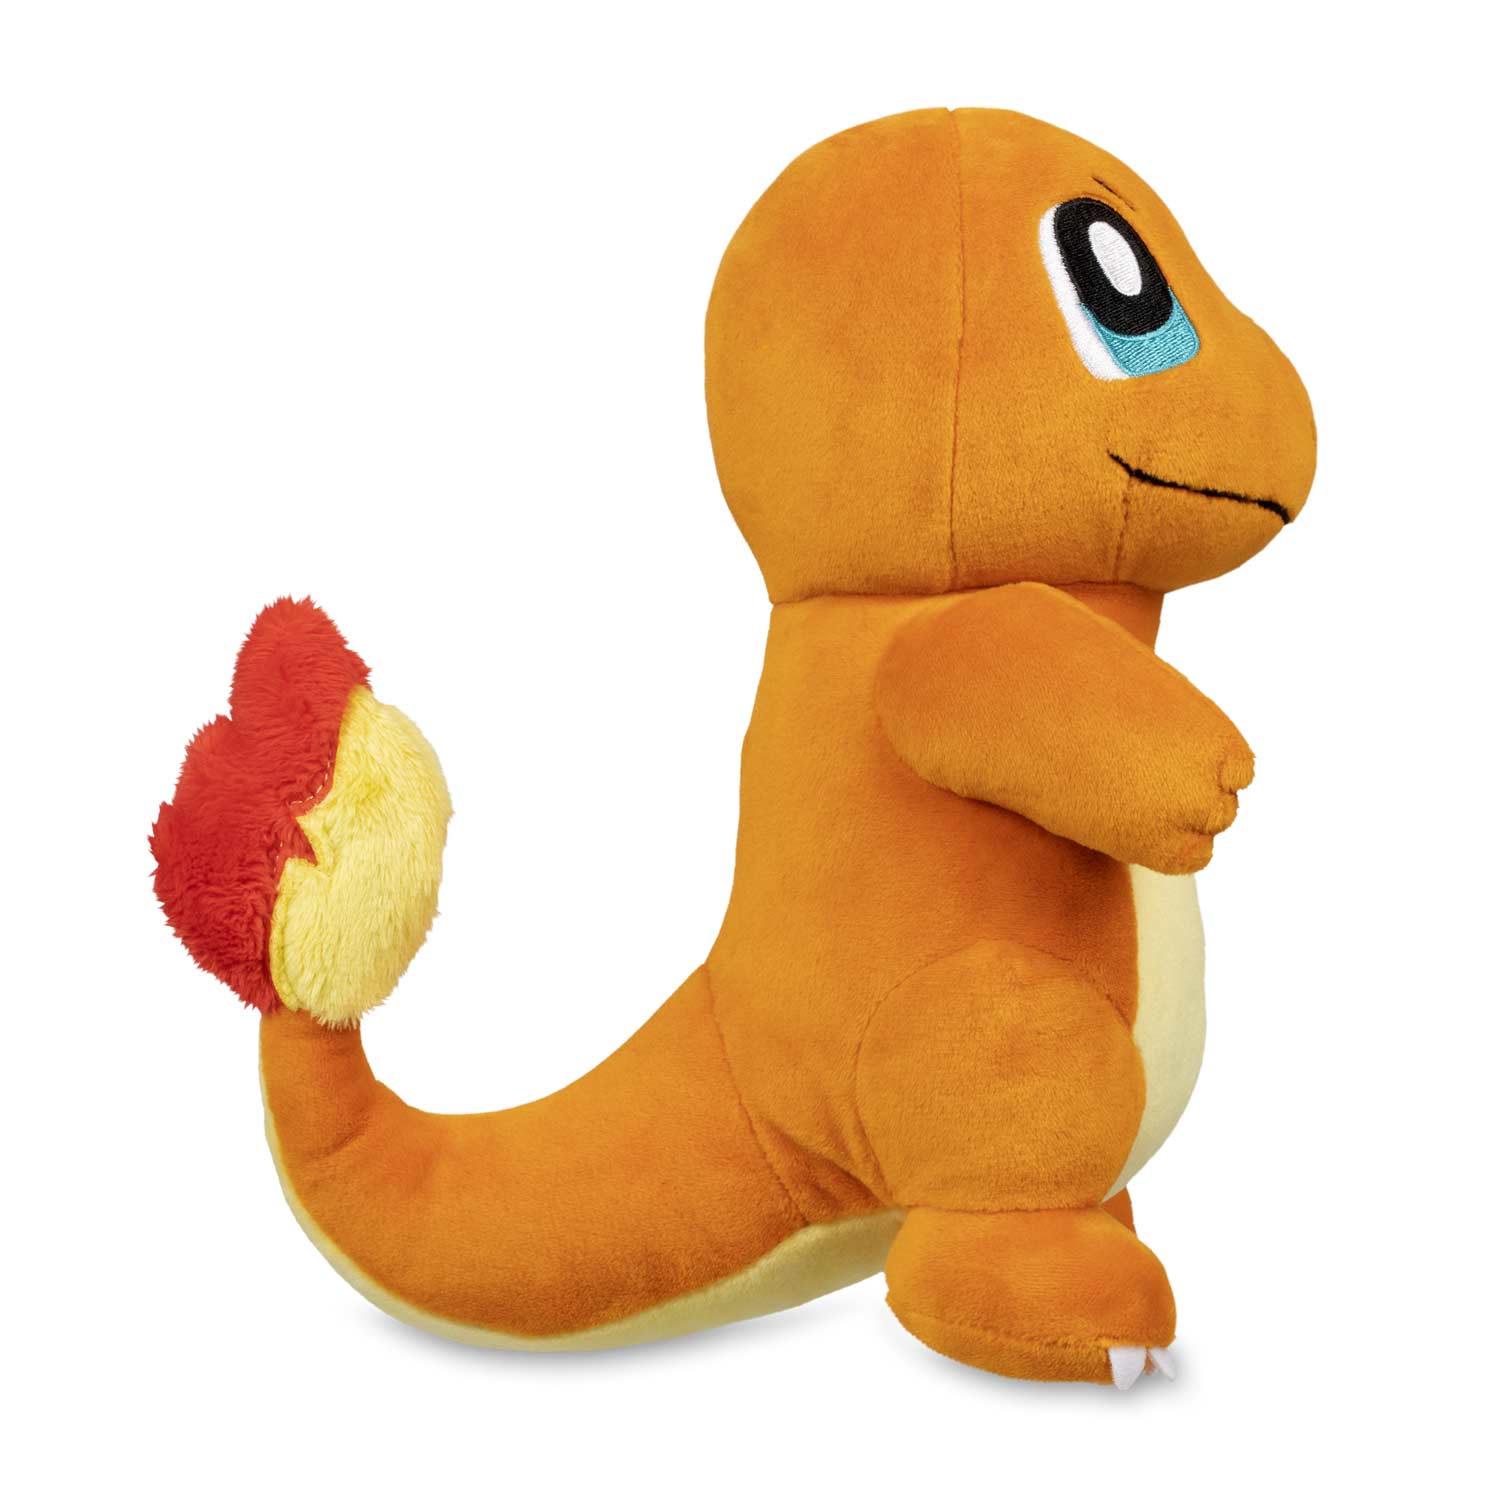 RARE Pokemon Plush Charmander Stuffed Toy Doll 9" Limited Edition 